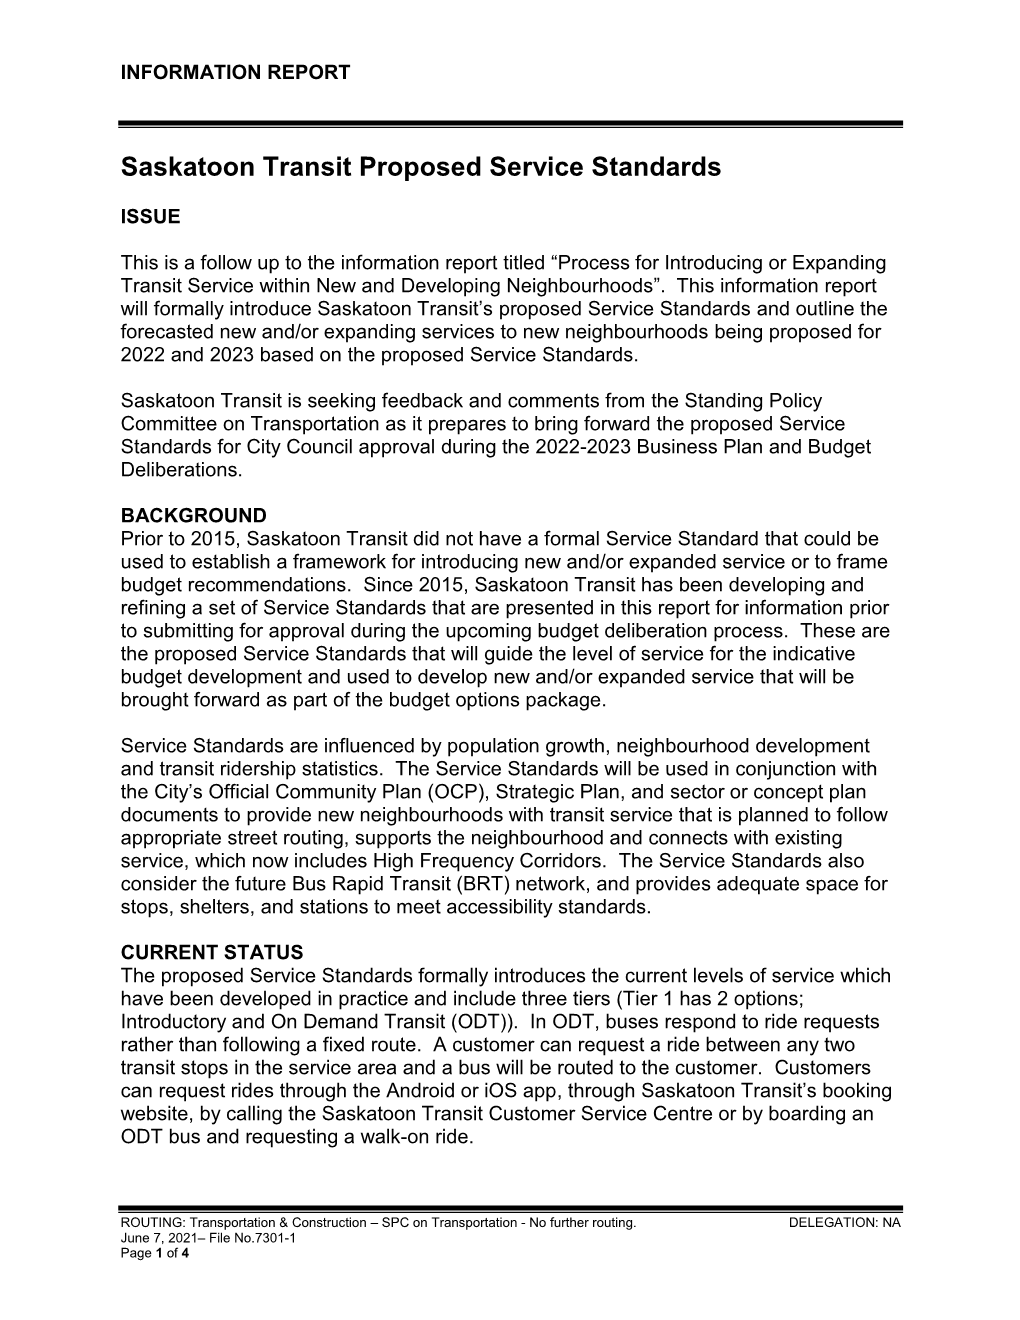 Saskatoon Transit Proposed Service Standards.Pdf